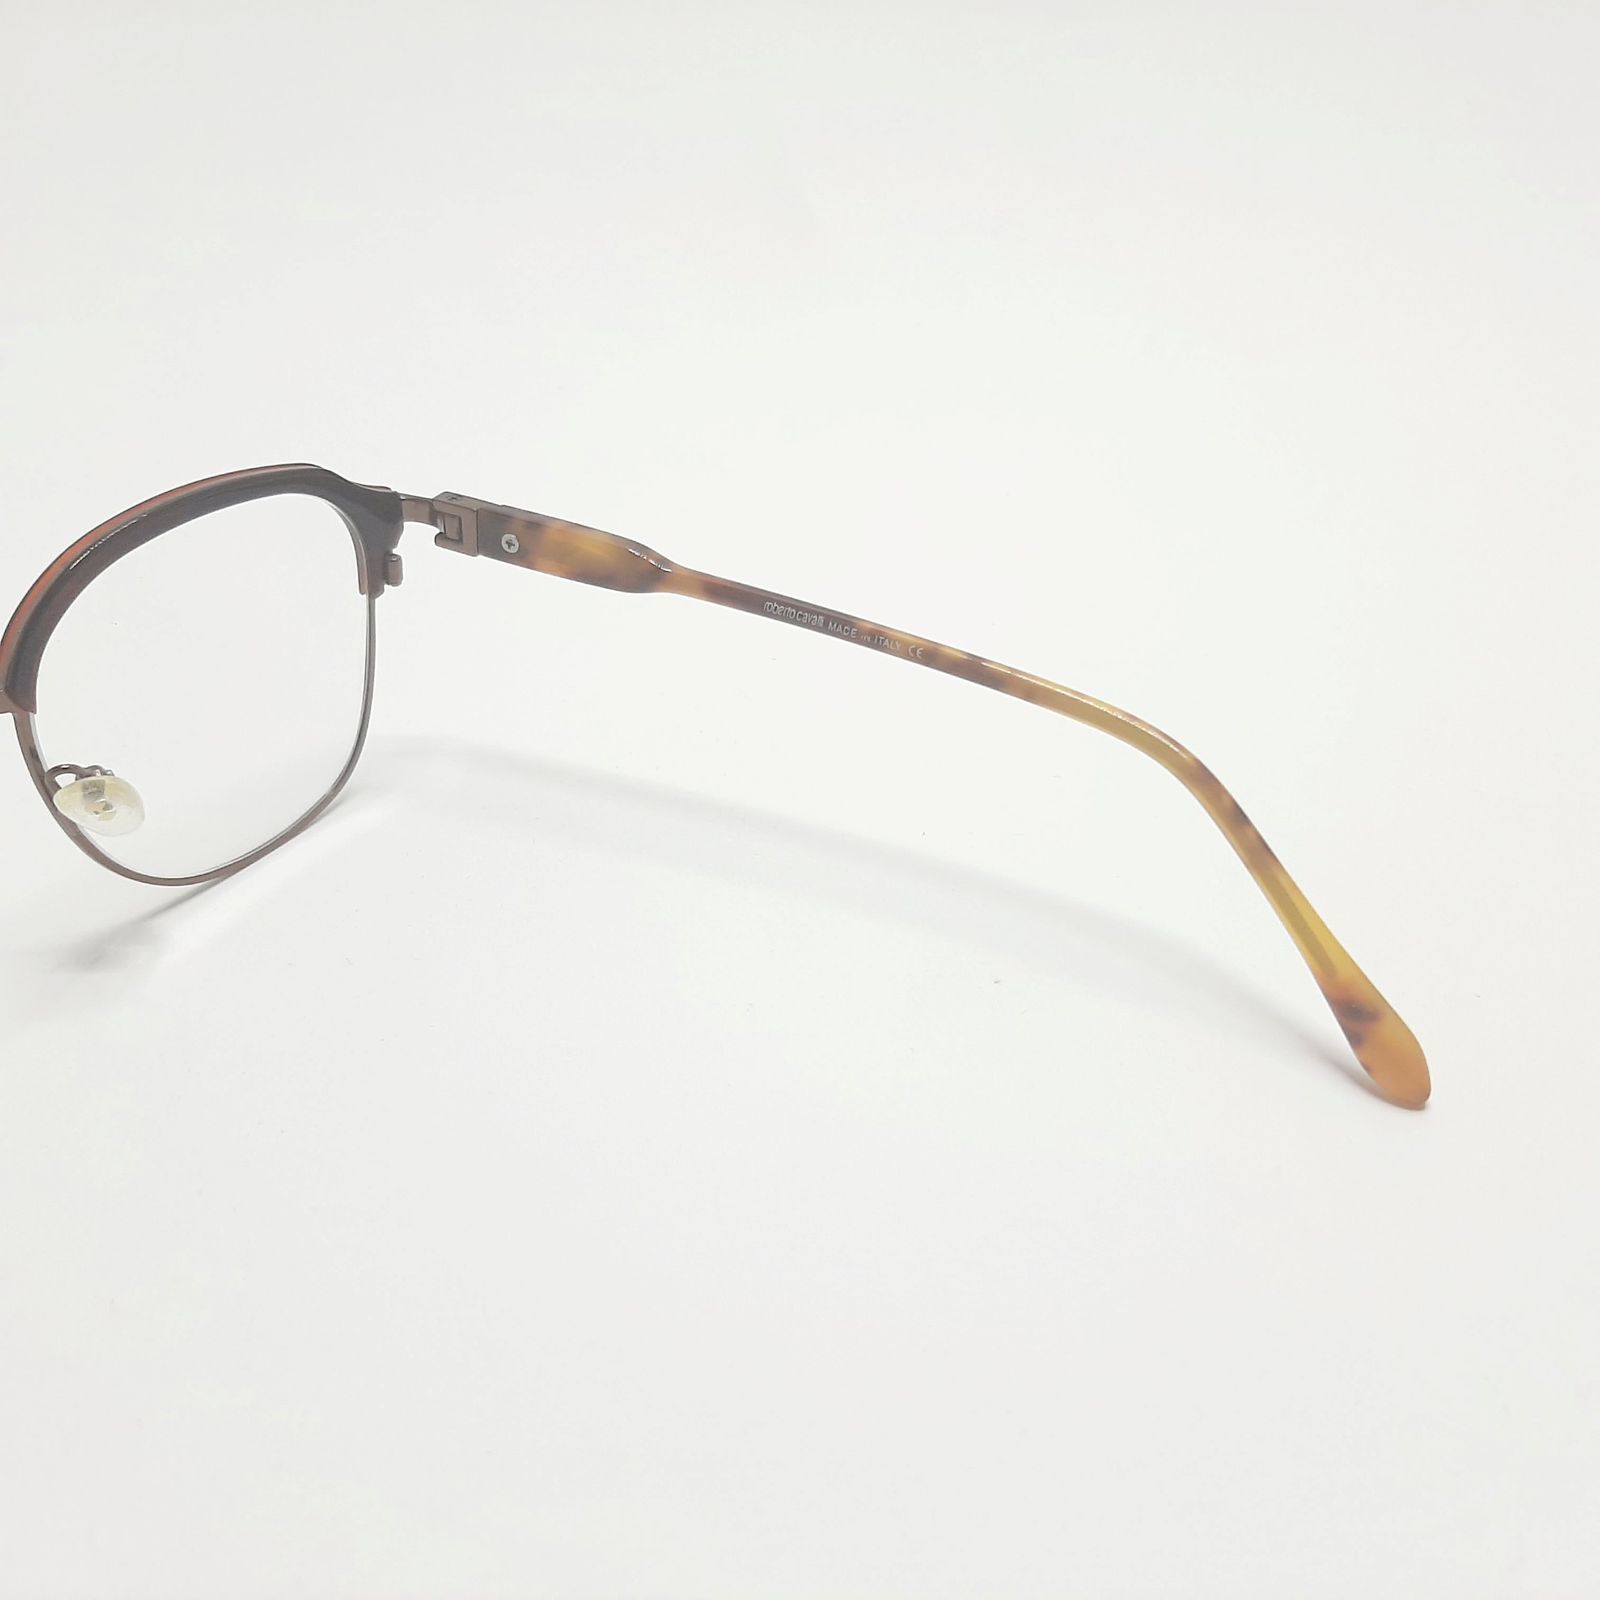 فریم عینک طبی روبرتو کاوالی مدل RC10657Jc7 -  - 6